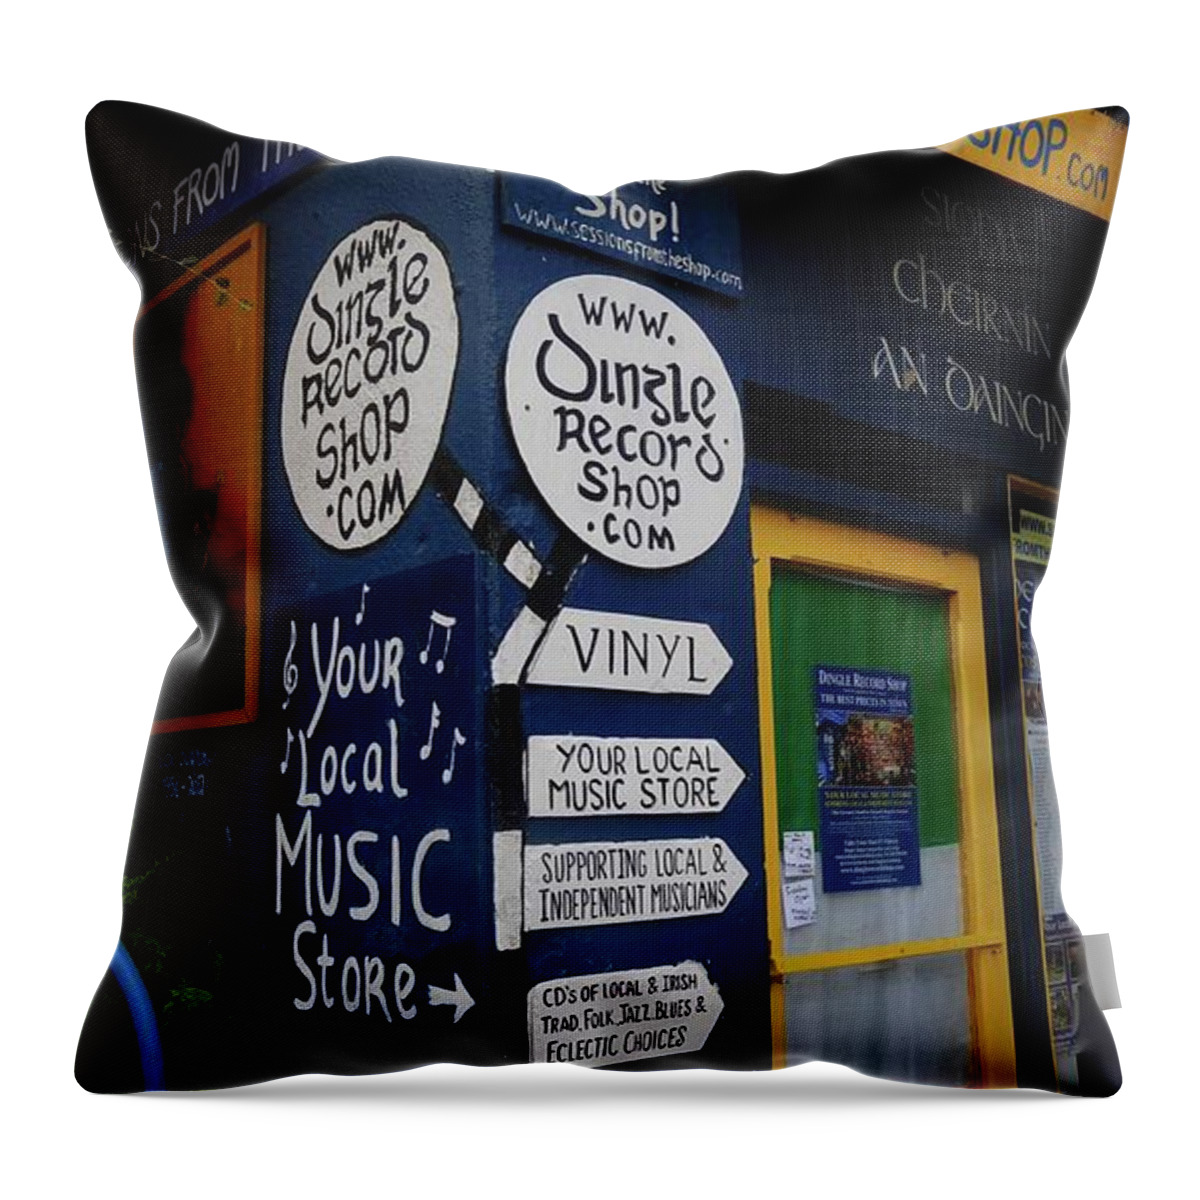 Ireland Throw Pillow featuring the photograph Dingle Record Shop by Melinda Saminski